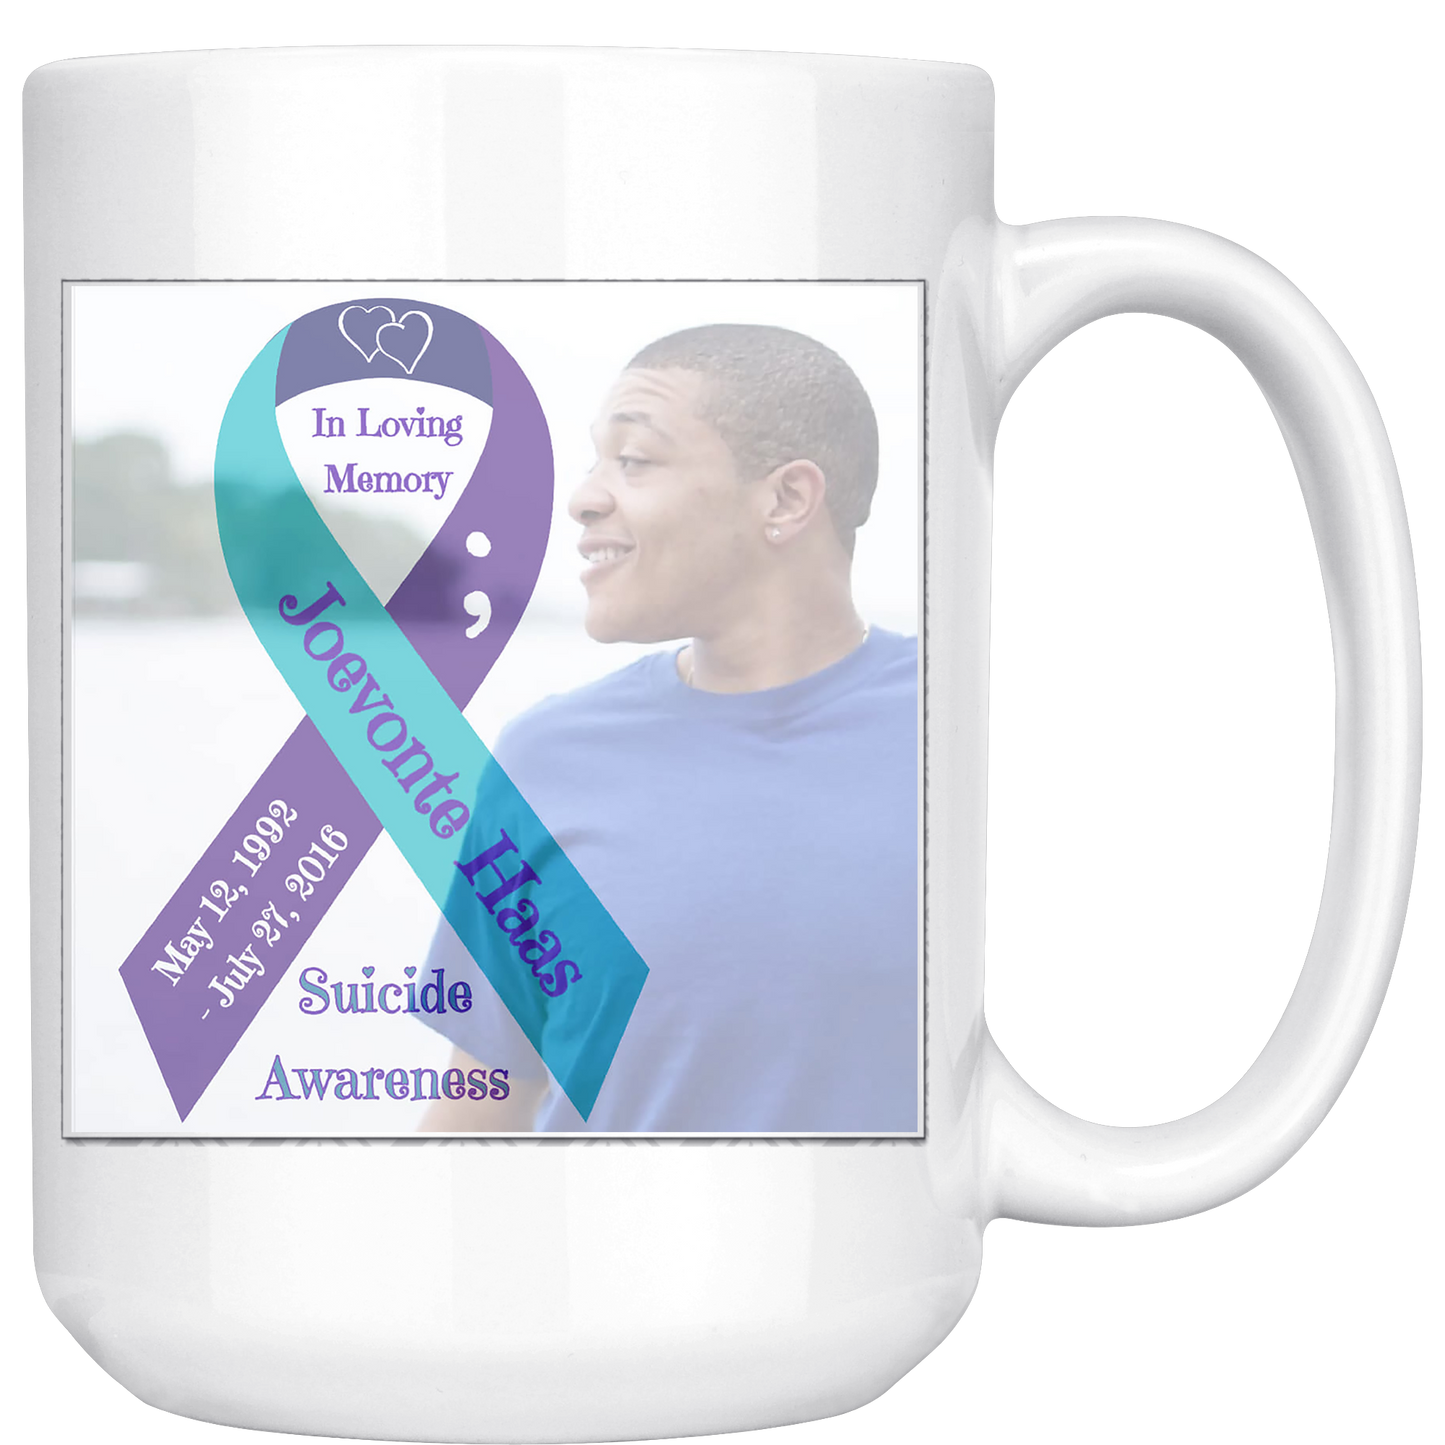 Personalized Suicide Awareness Ribbon & Photo Mug